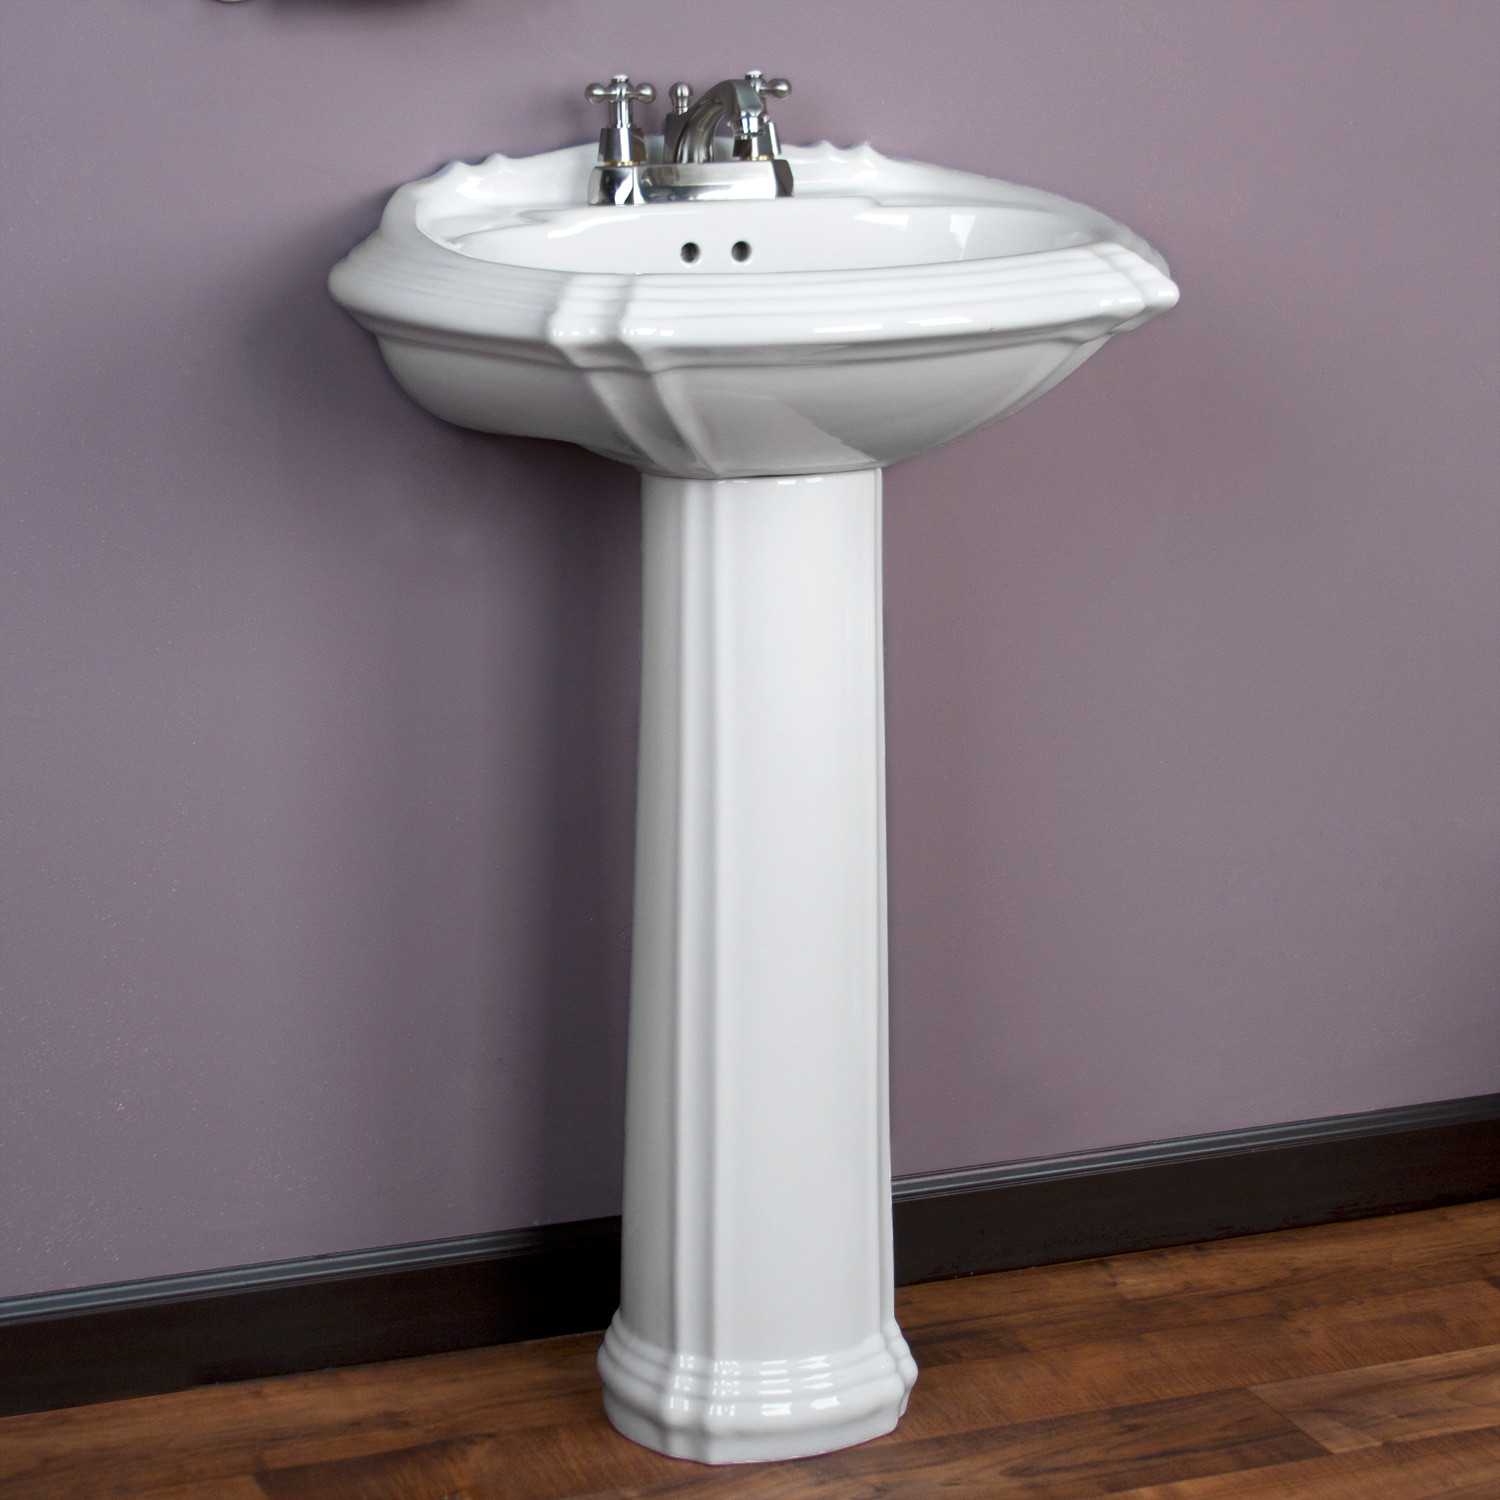 Best ideas about Pedestal Bathroom Sinks
. Save or Pin Regent Pedestal Sink Now.